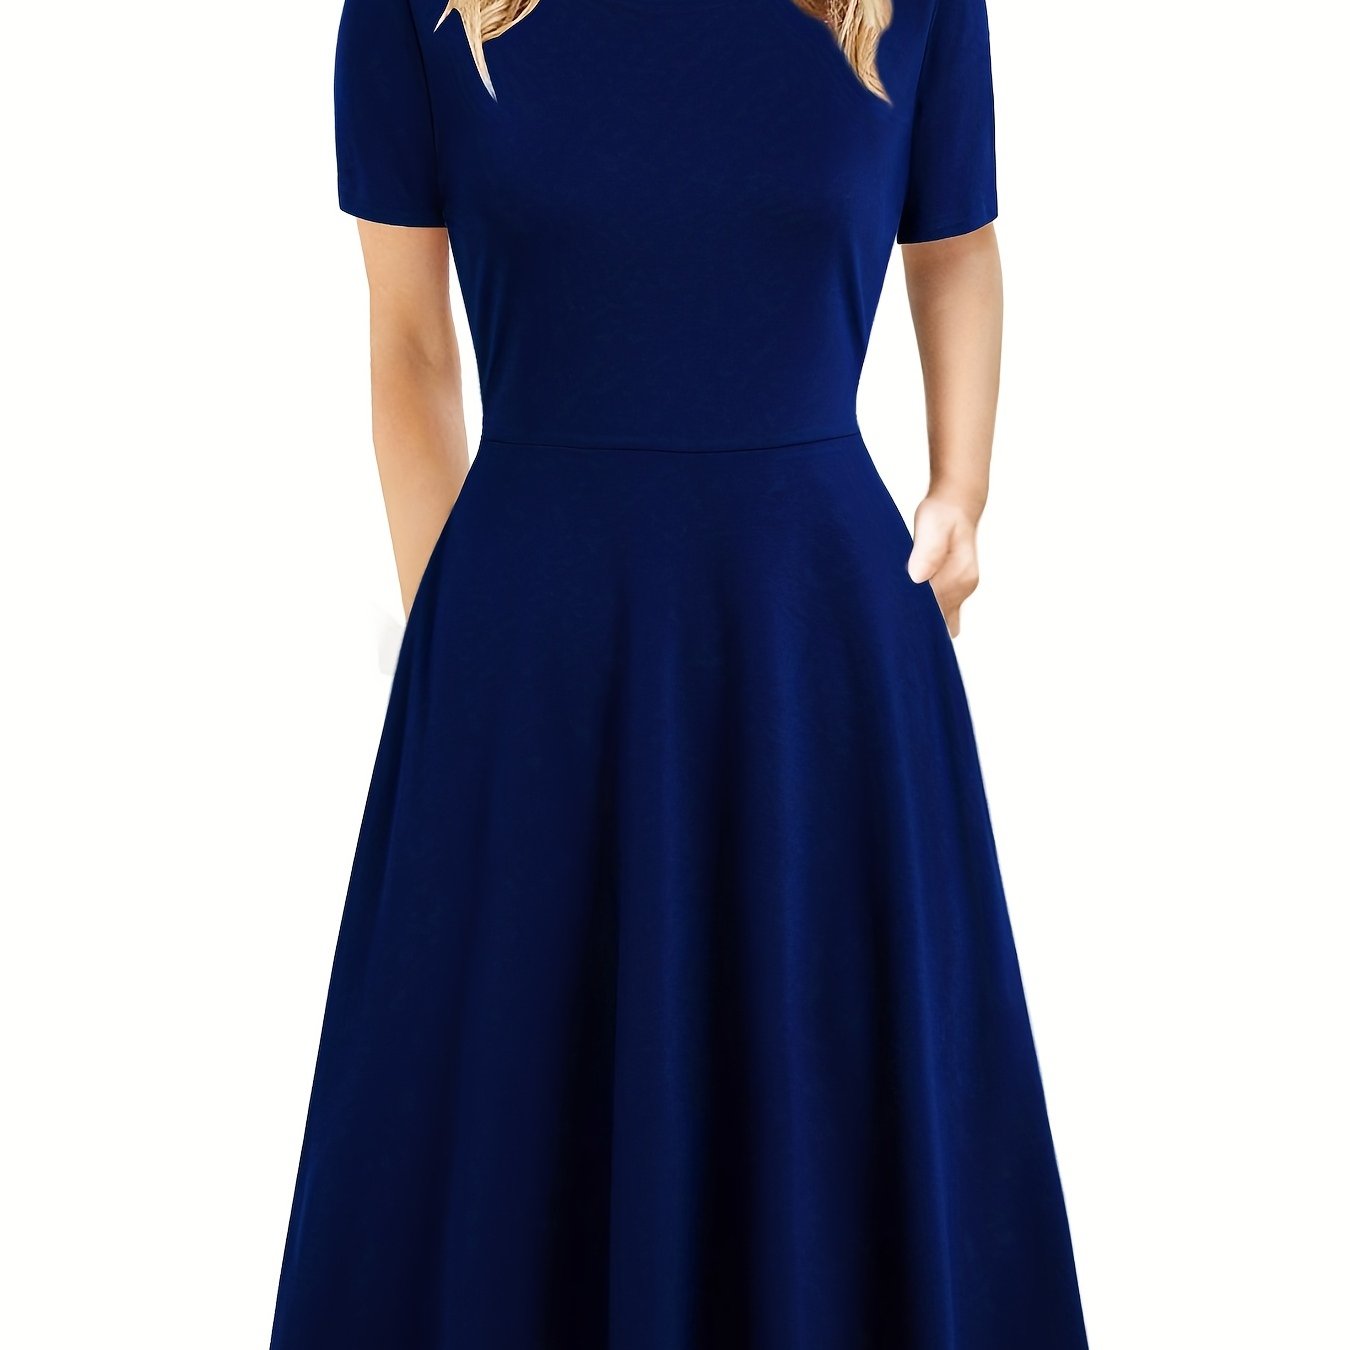 Antmvs Elegant Retro A-line Dress, Short Sleeve Casual Dress For Spring & Summer, Women's Clothing